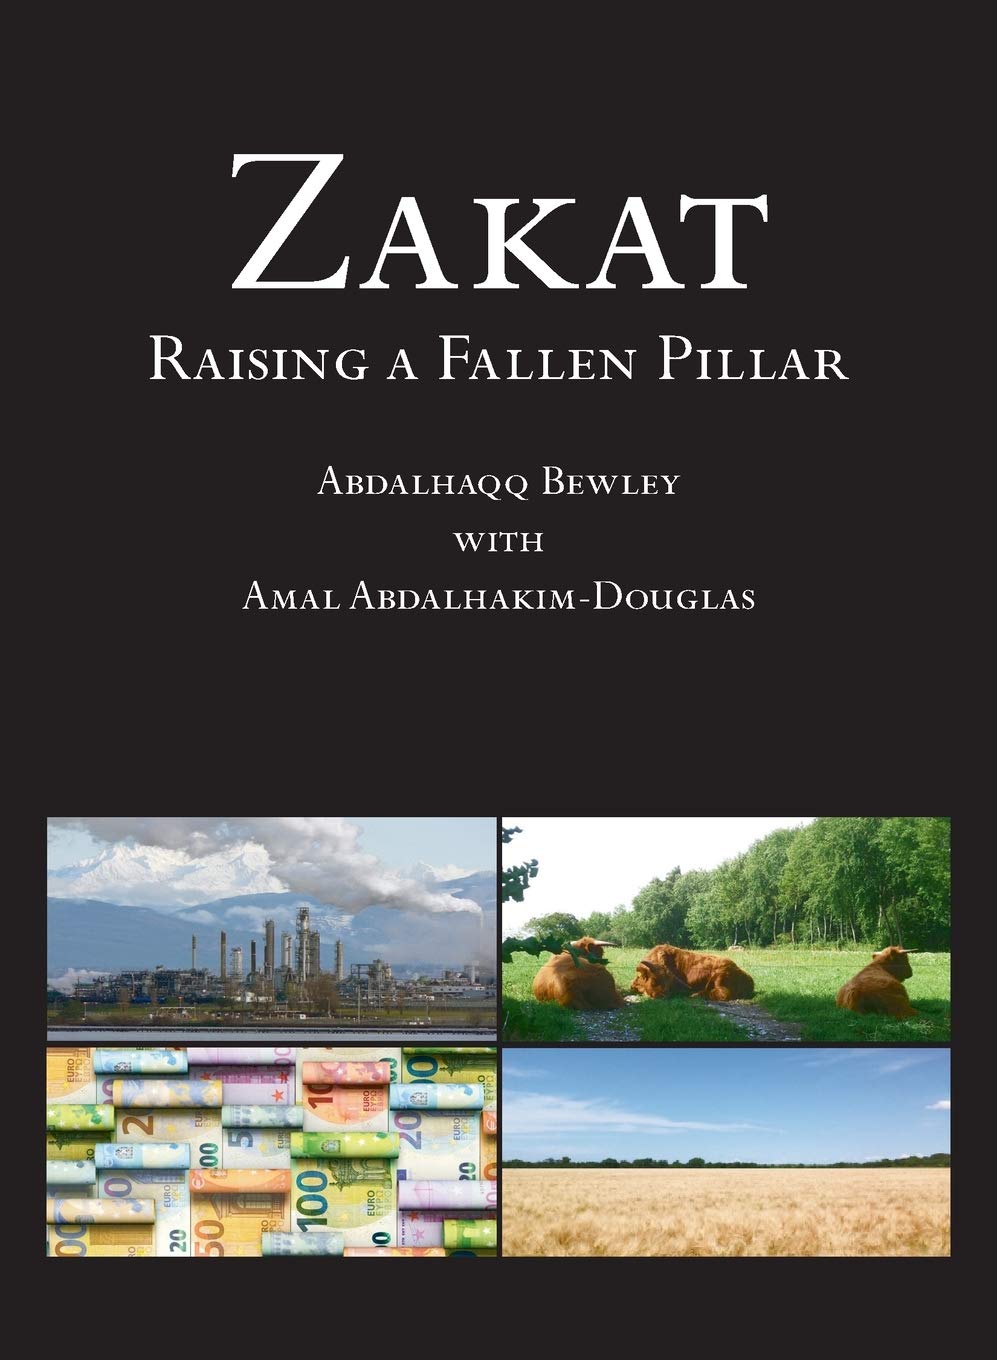 Zakat: Raising a Fallen Pillar - Abdalhaqq Bewley, Amal Abdalhakim Douglas (Authors)